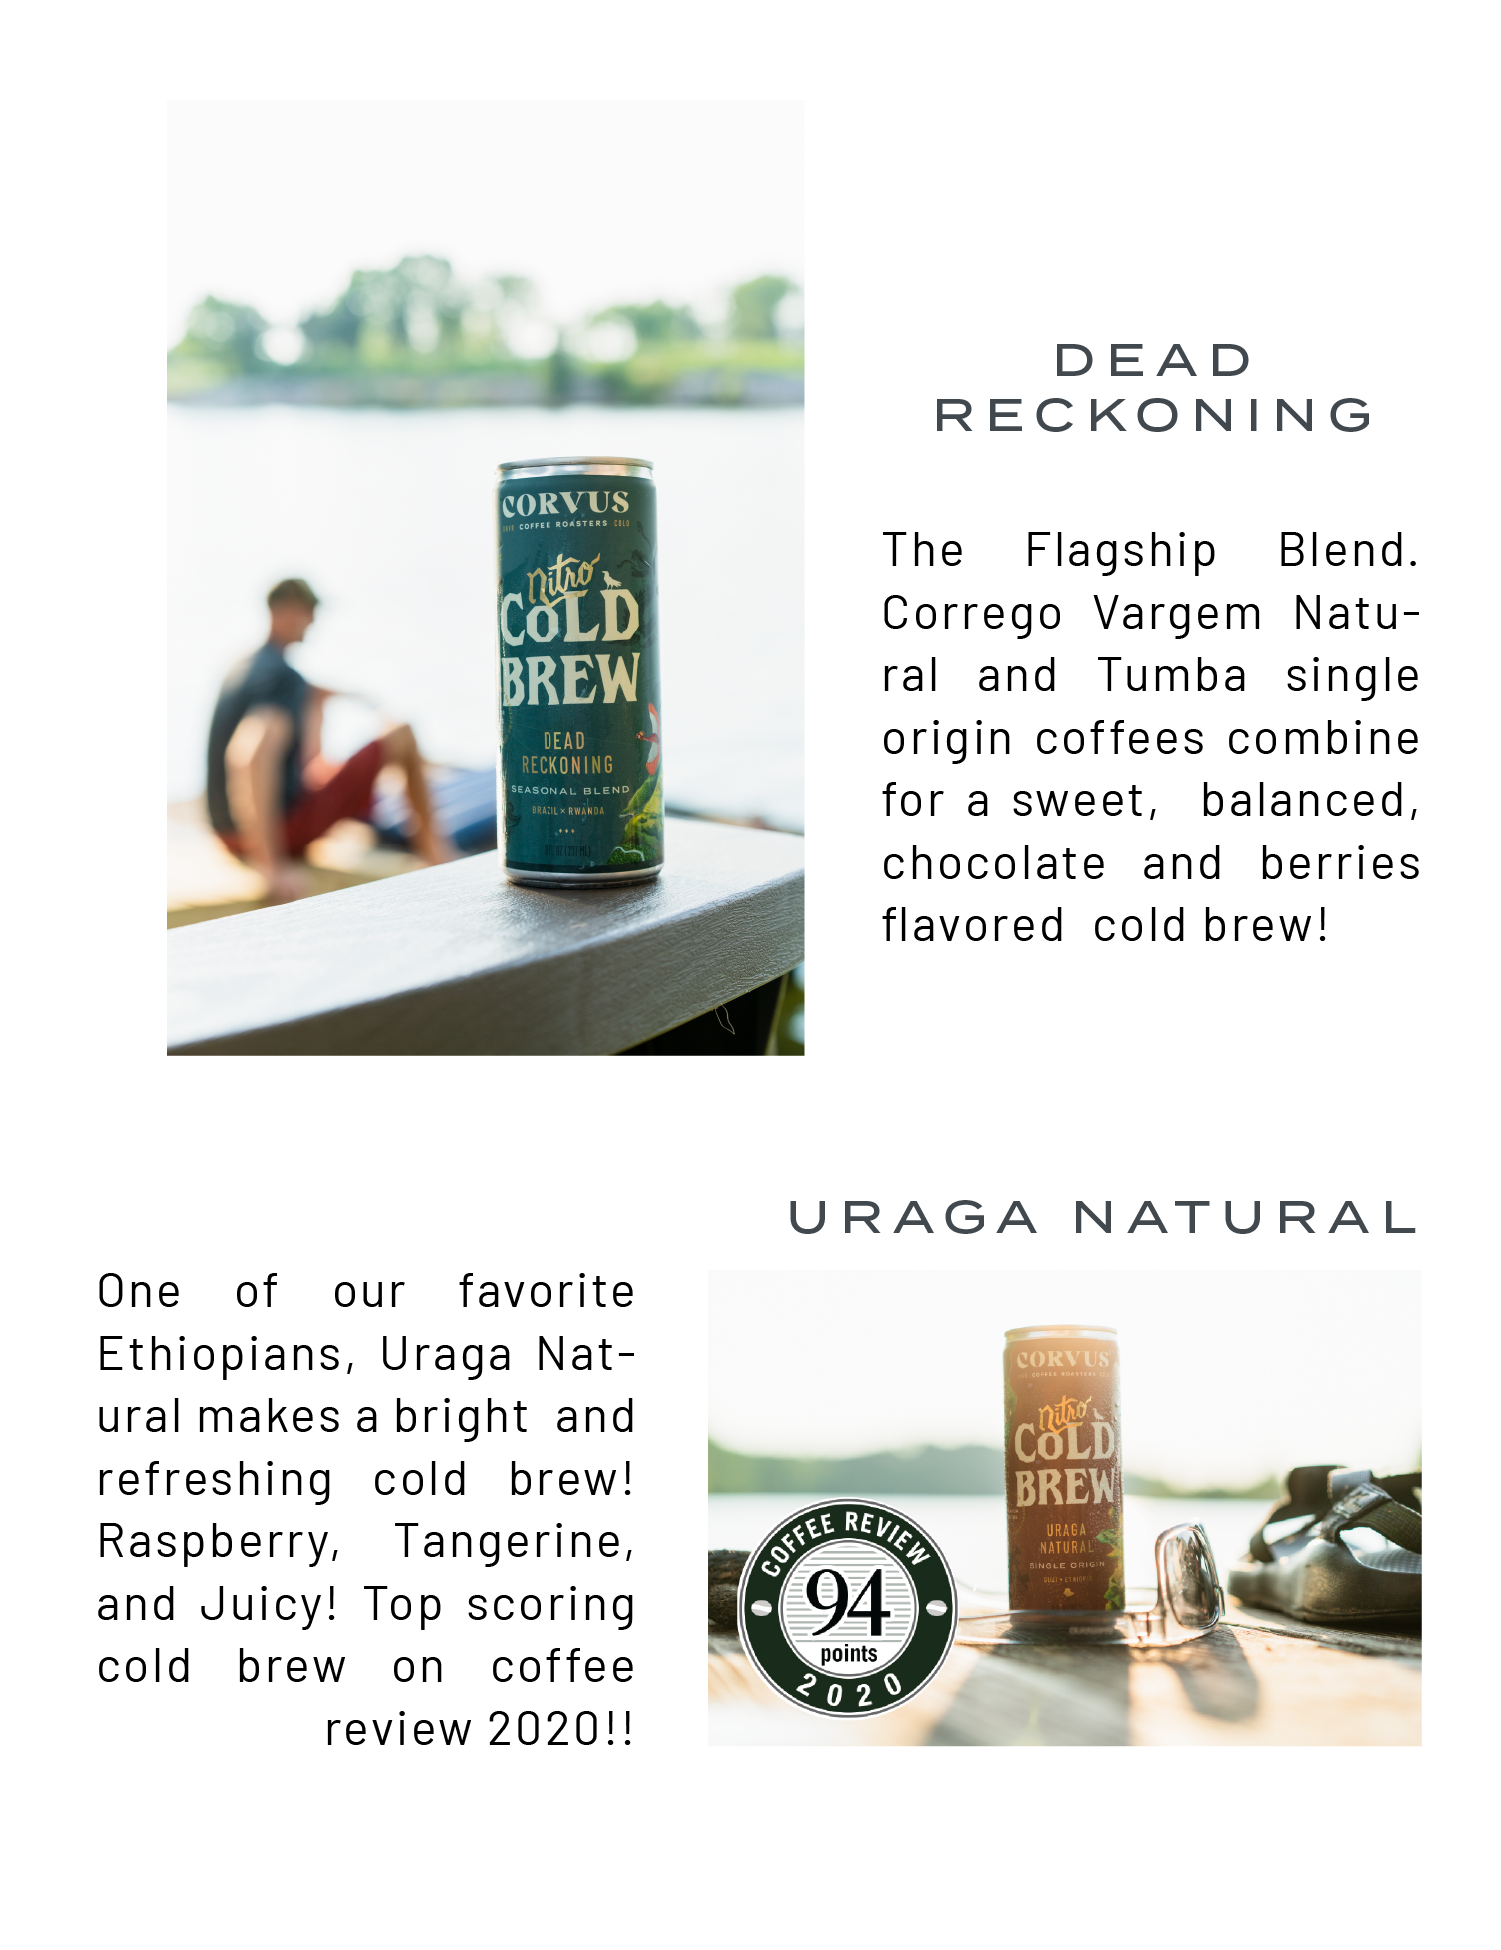 Dead Reckoning and Uraga Natural cold brew